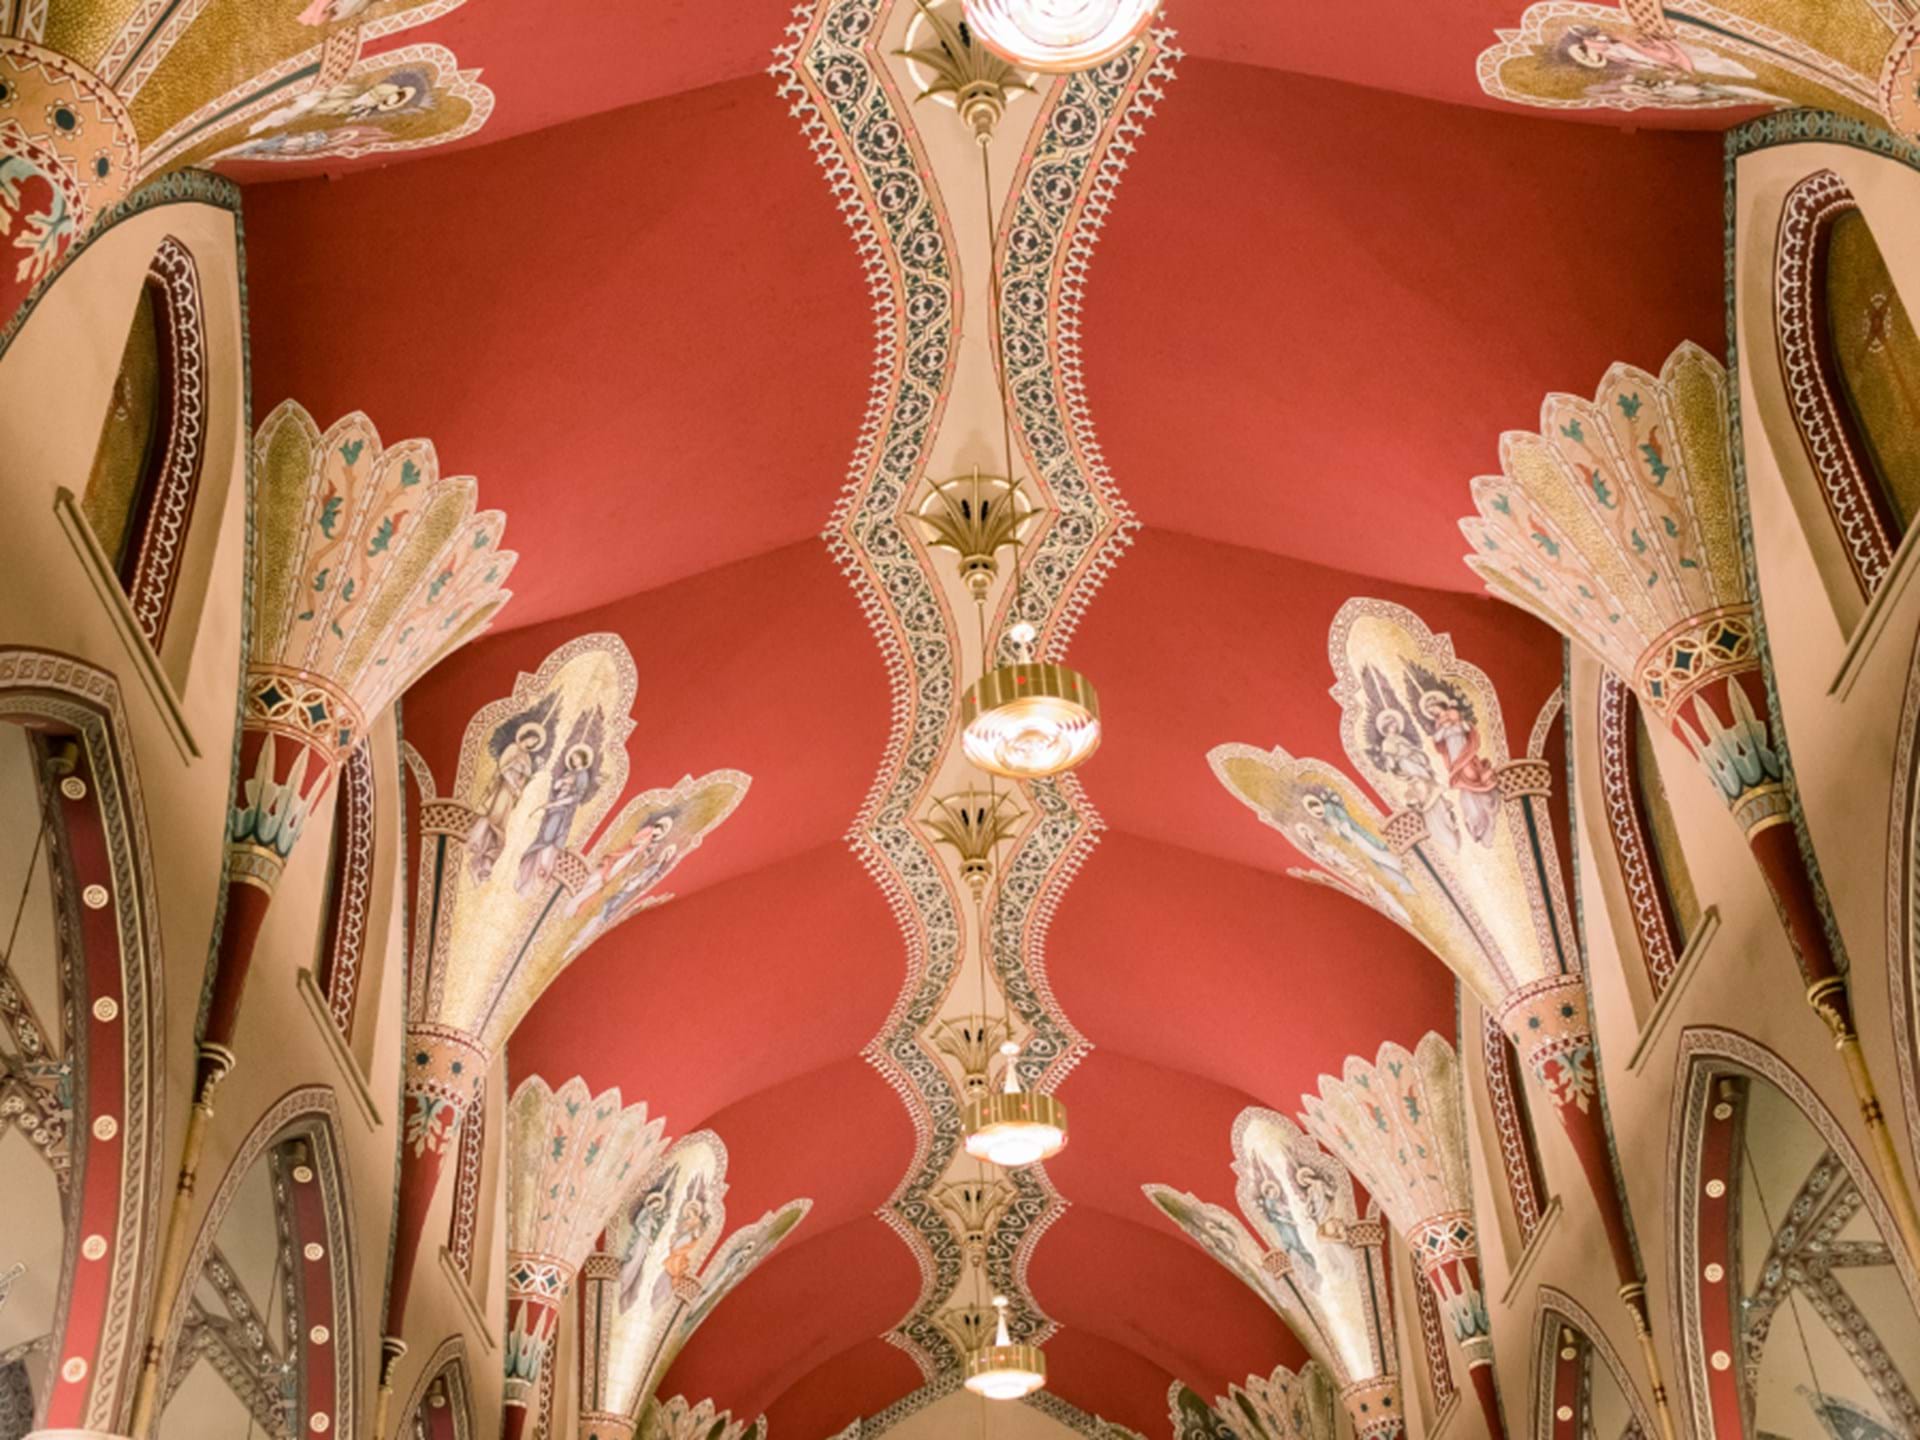 Ornate detailing on ceiling